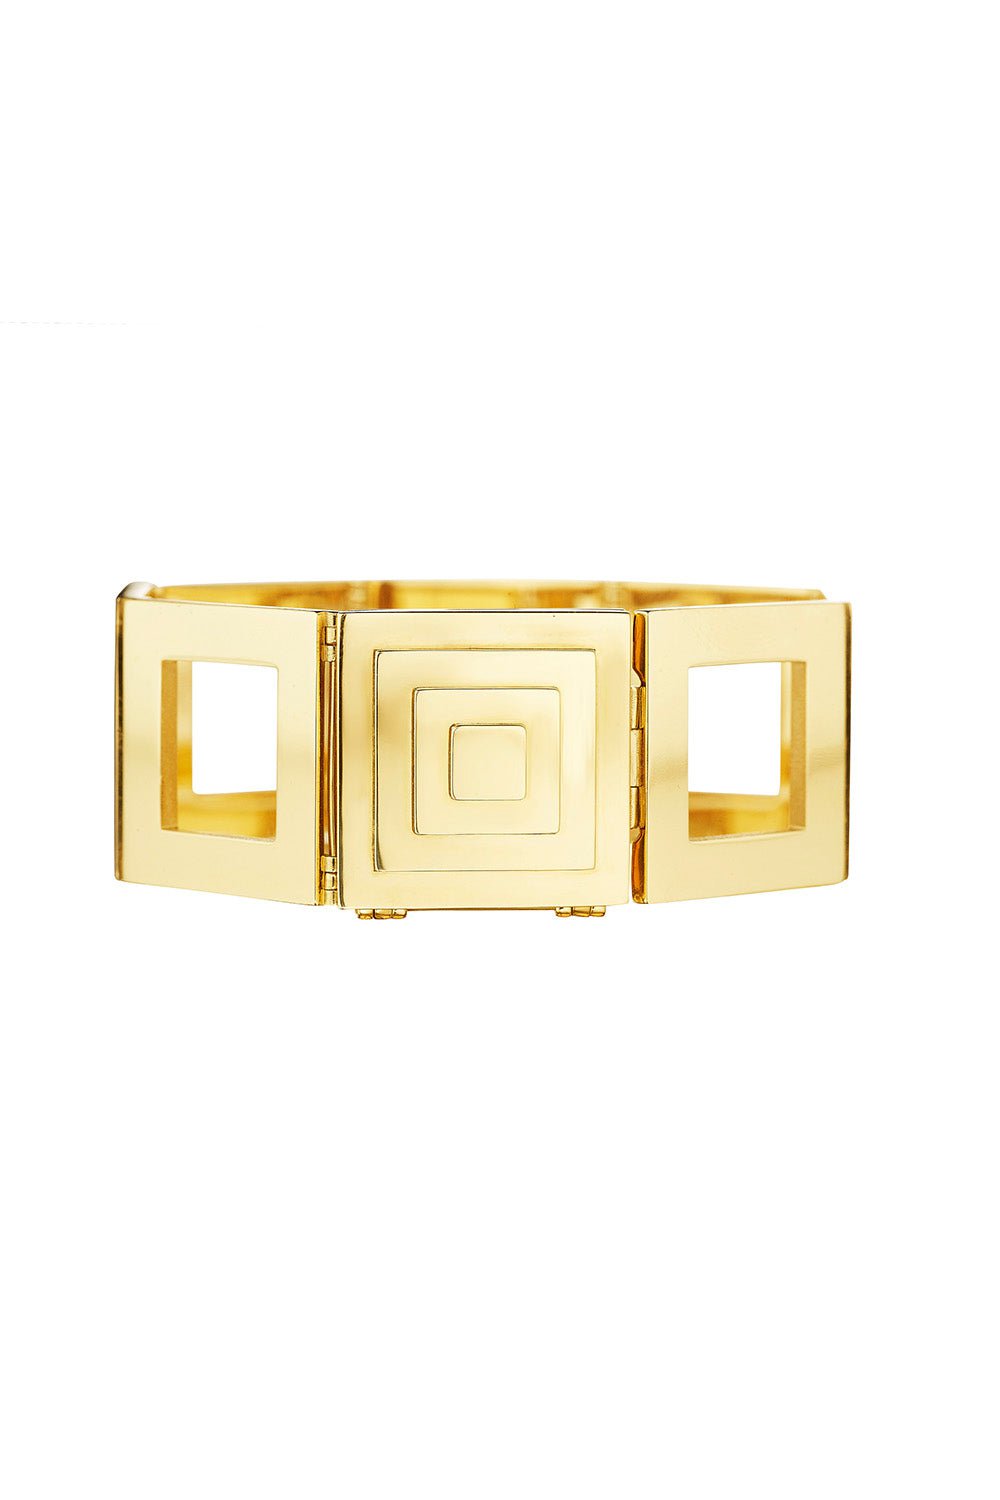 CADAR-Foundation Bracelet-YELLOW GOLD